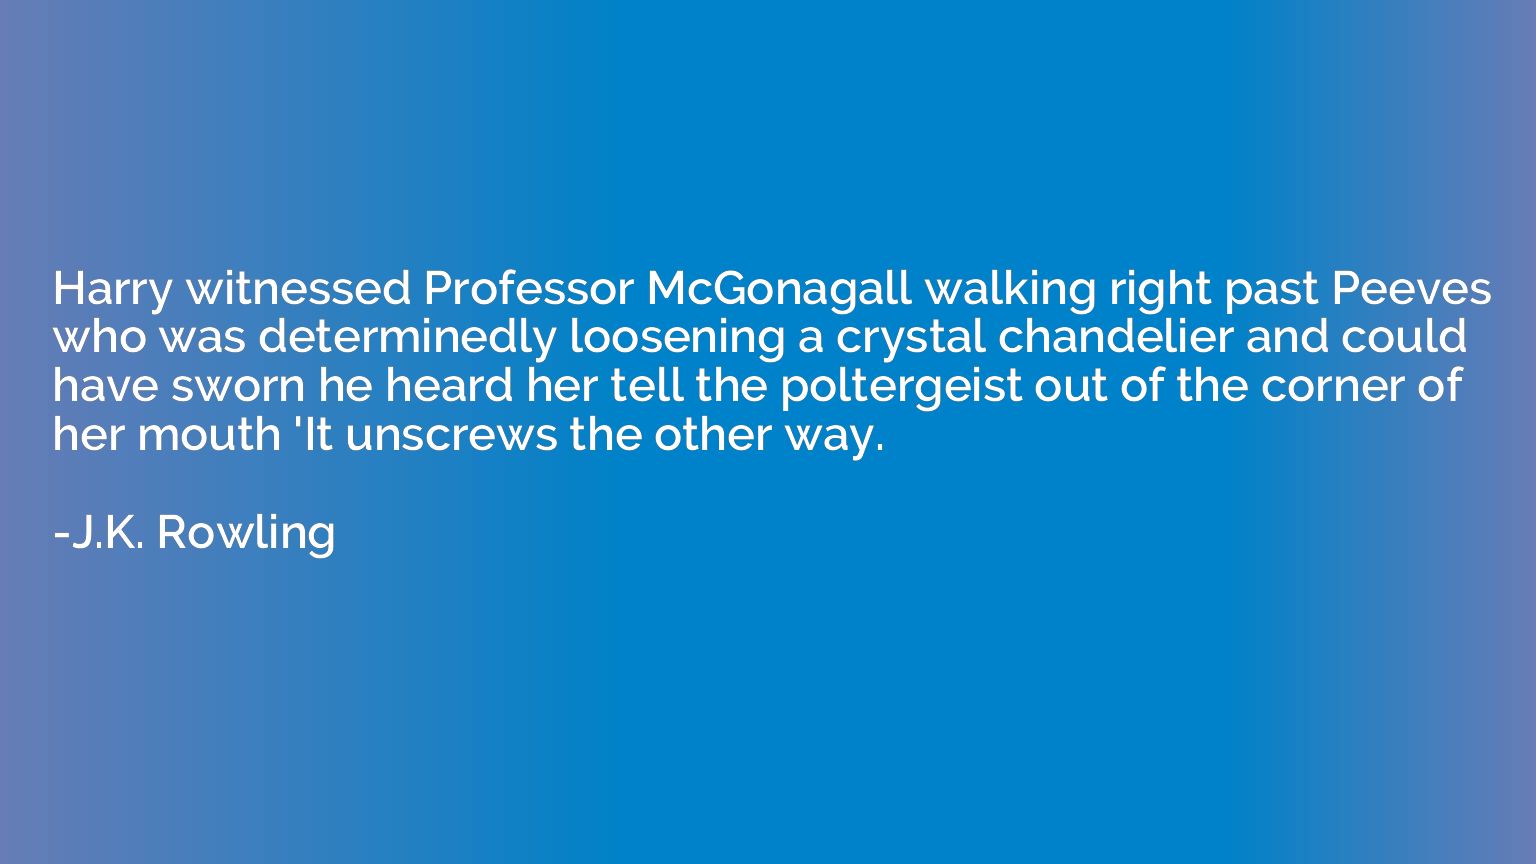 Harry witnessed Professor McGonagall walking right past Peev